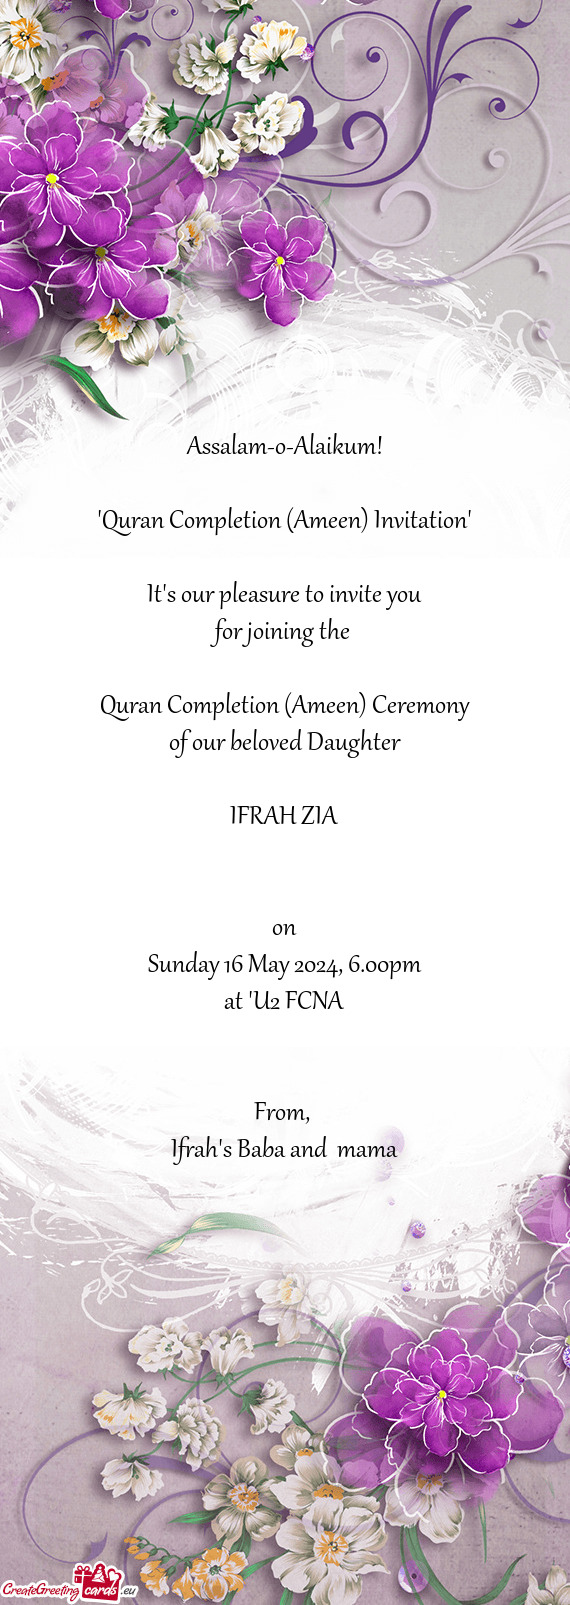 Quran Completion (Ameen) Ceremony